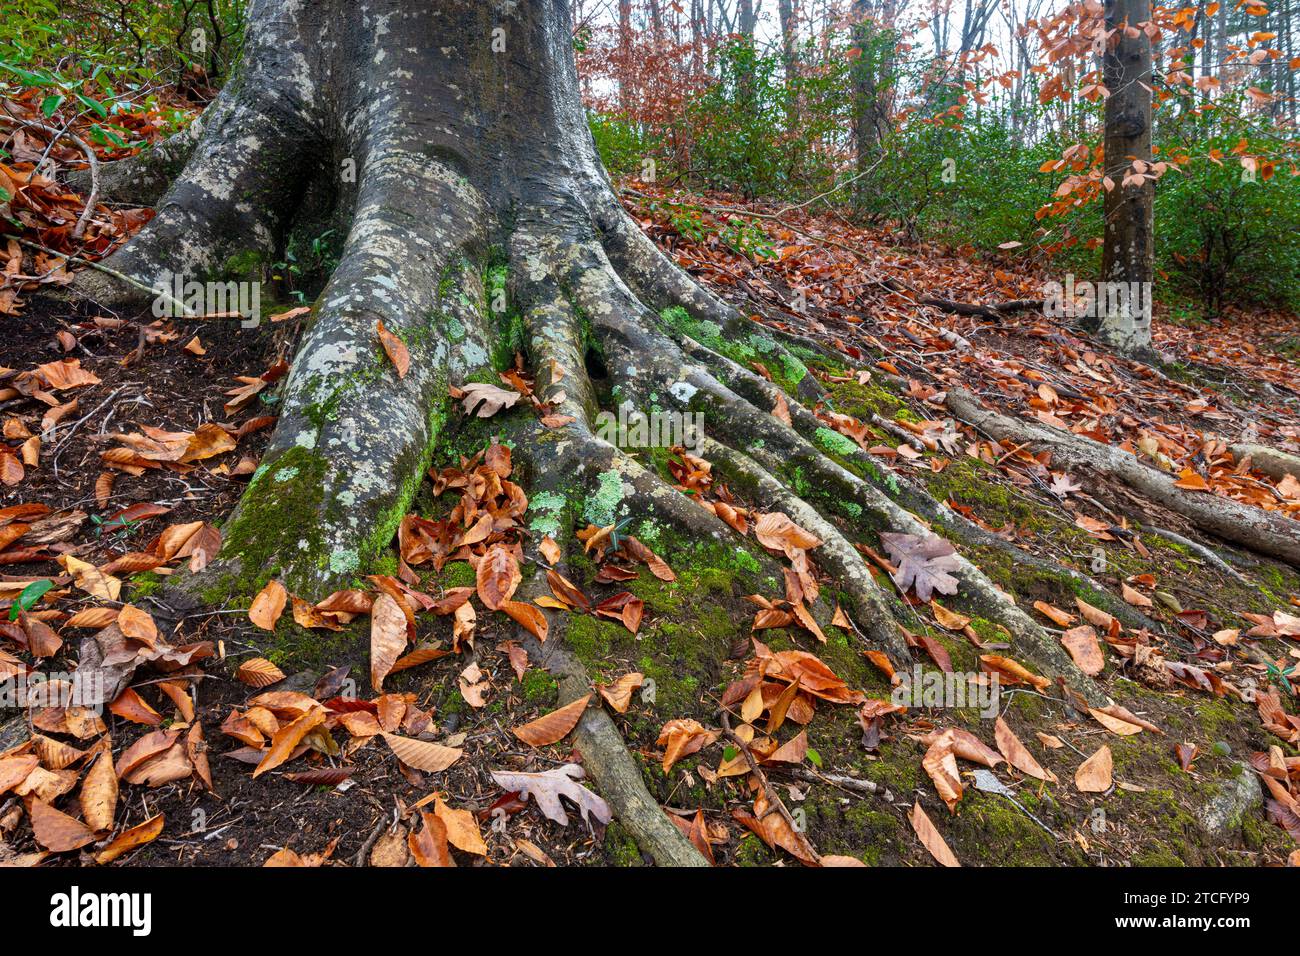 Large American beech trees (Fagus grandifolia) and evergreen mountain laurel (Kalmia latifolia) shrubs in forest at Ivy Creek Natural Area near Charlo Stock Photo